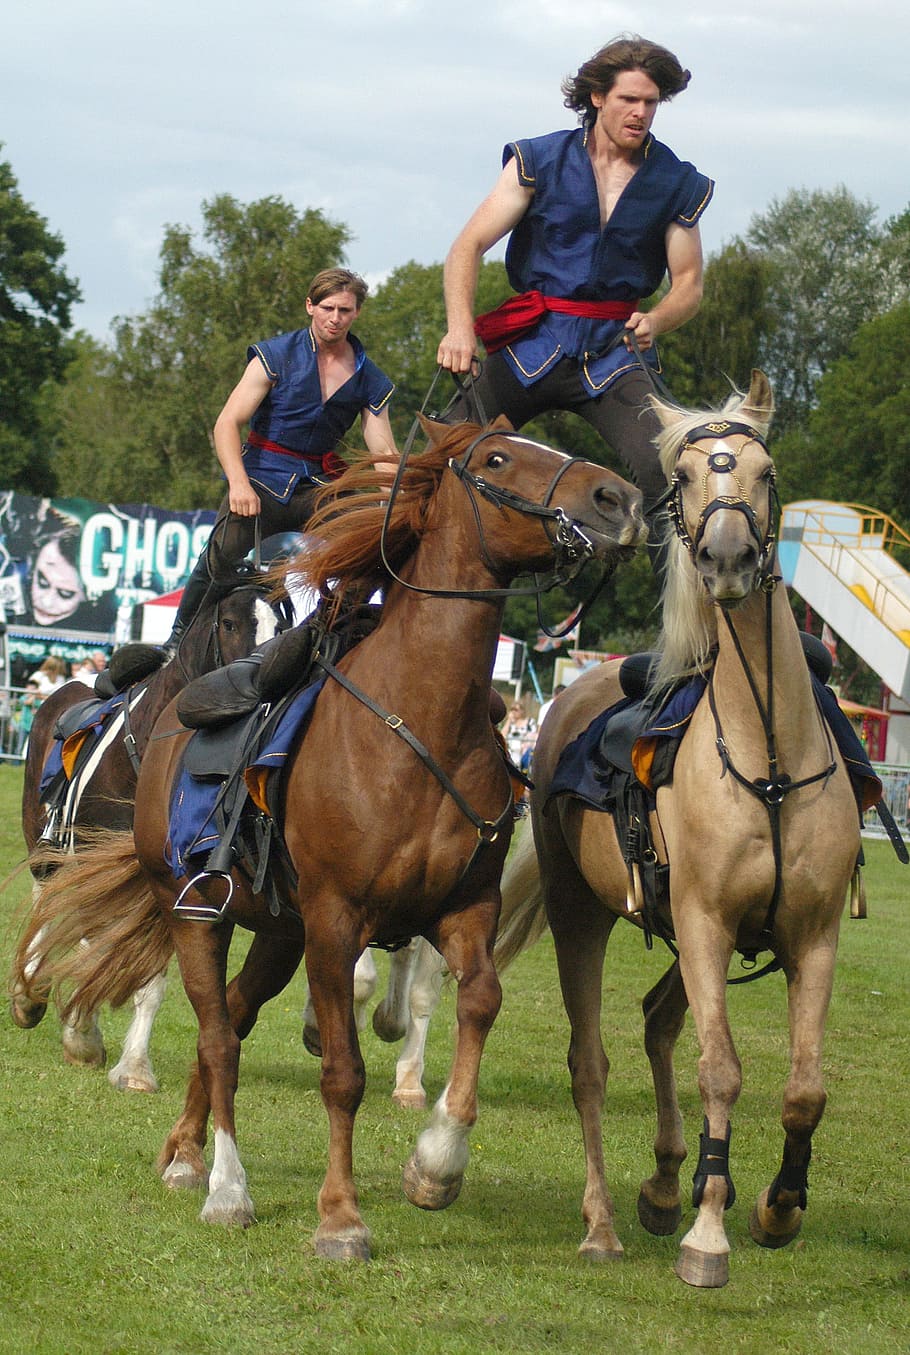 Horse, Stunt, Equestrian, Animal, countryside, equine, horsewoman, horsemanship, dressage, full length